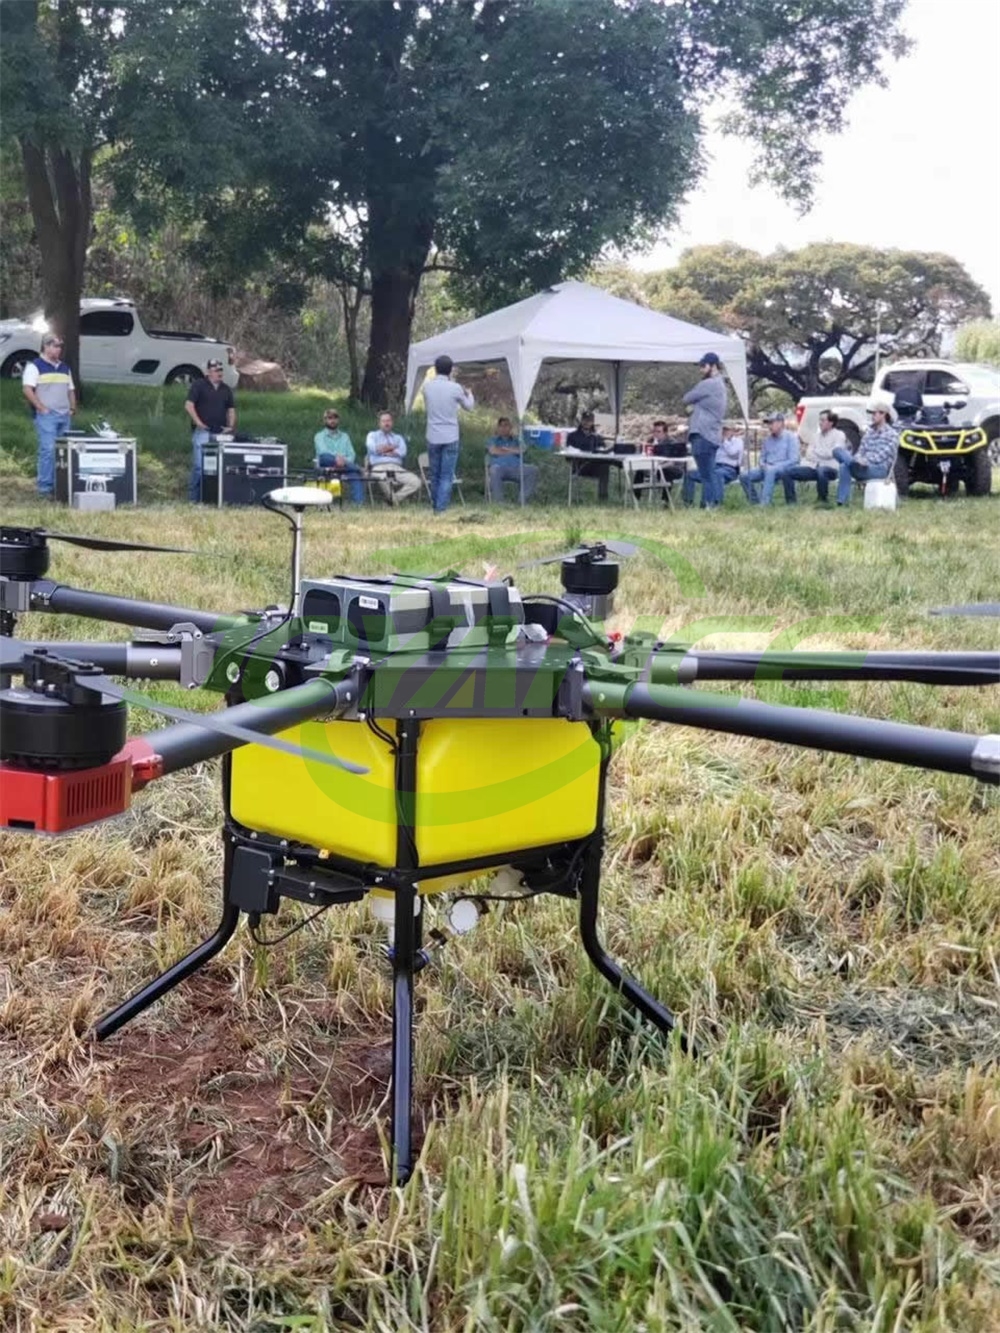 distributor promotes JOYANCE  drone agriculture sprayer-drone agriculture sprayer, agriculture drone sprayer, sprayer drone, UAV crop duster